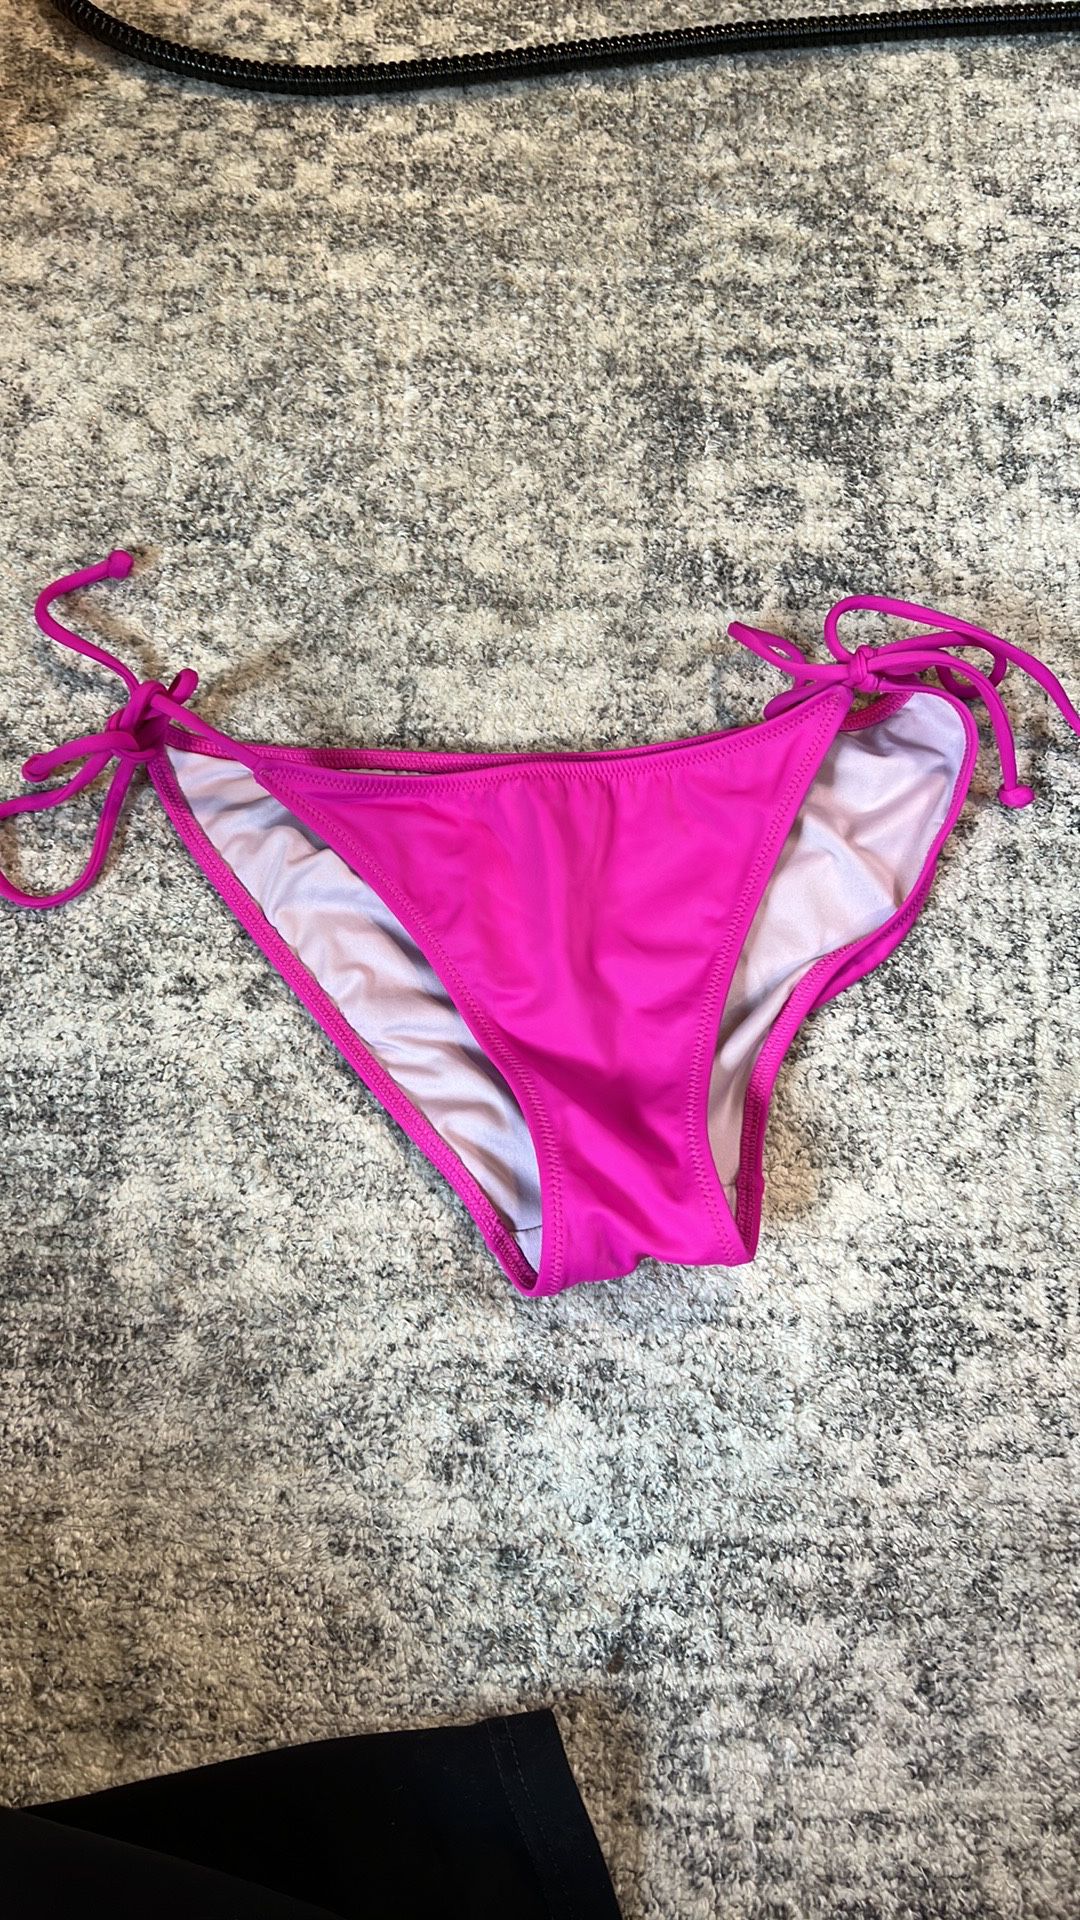 (NWOT) Victoria’s Secret Swimsuit Bottom - the teeny Bikini